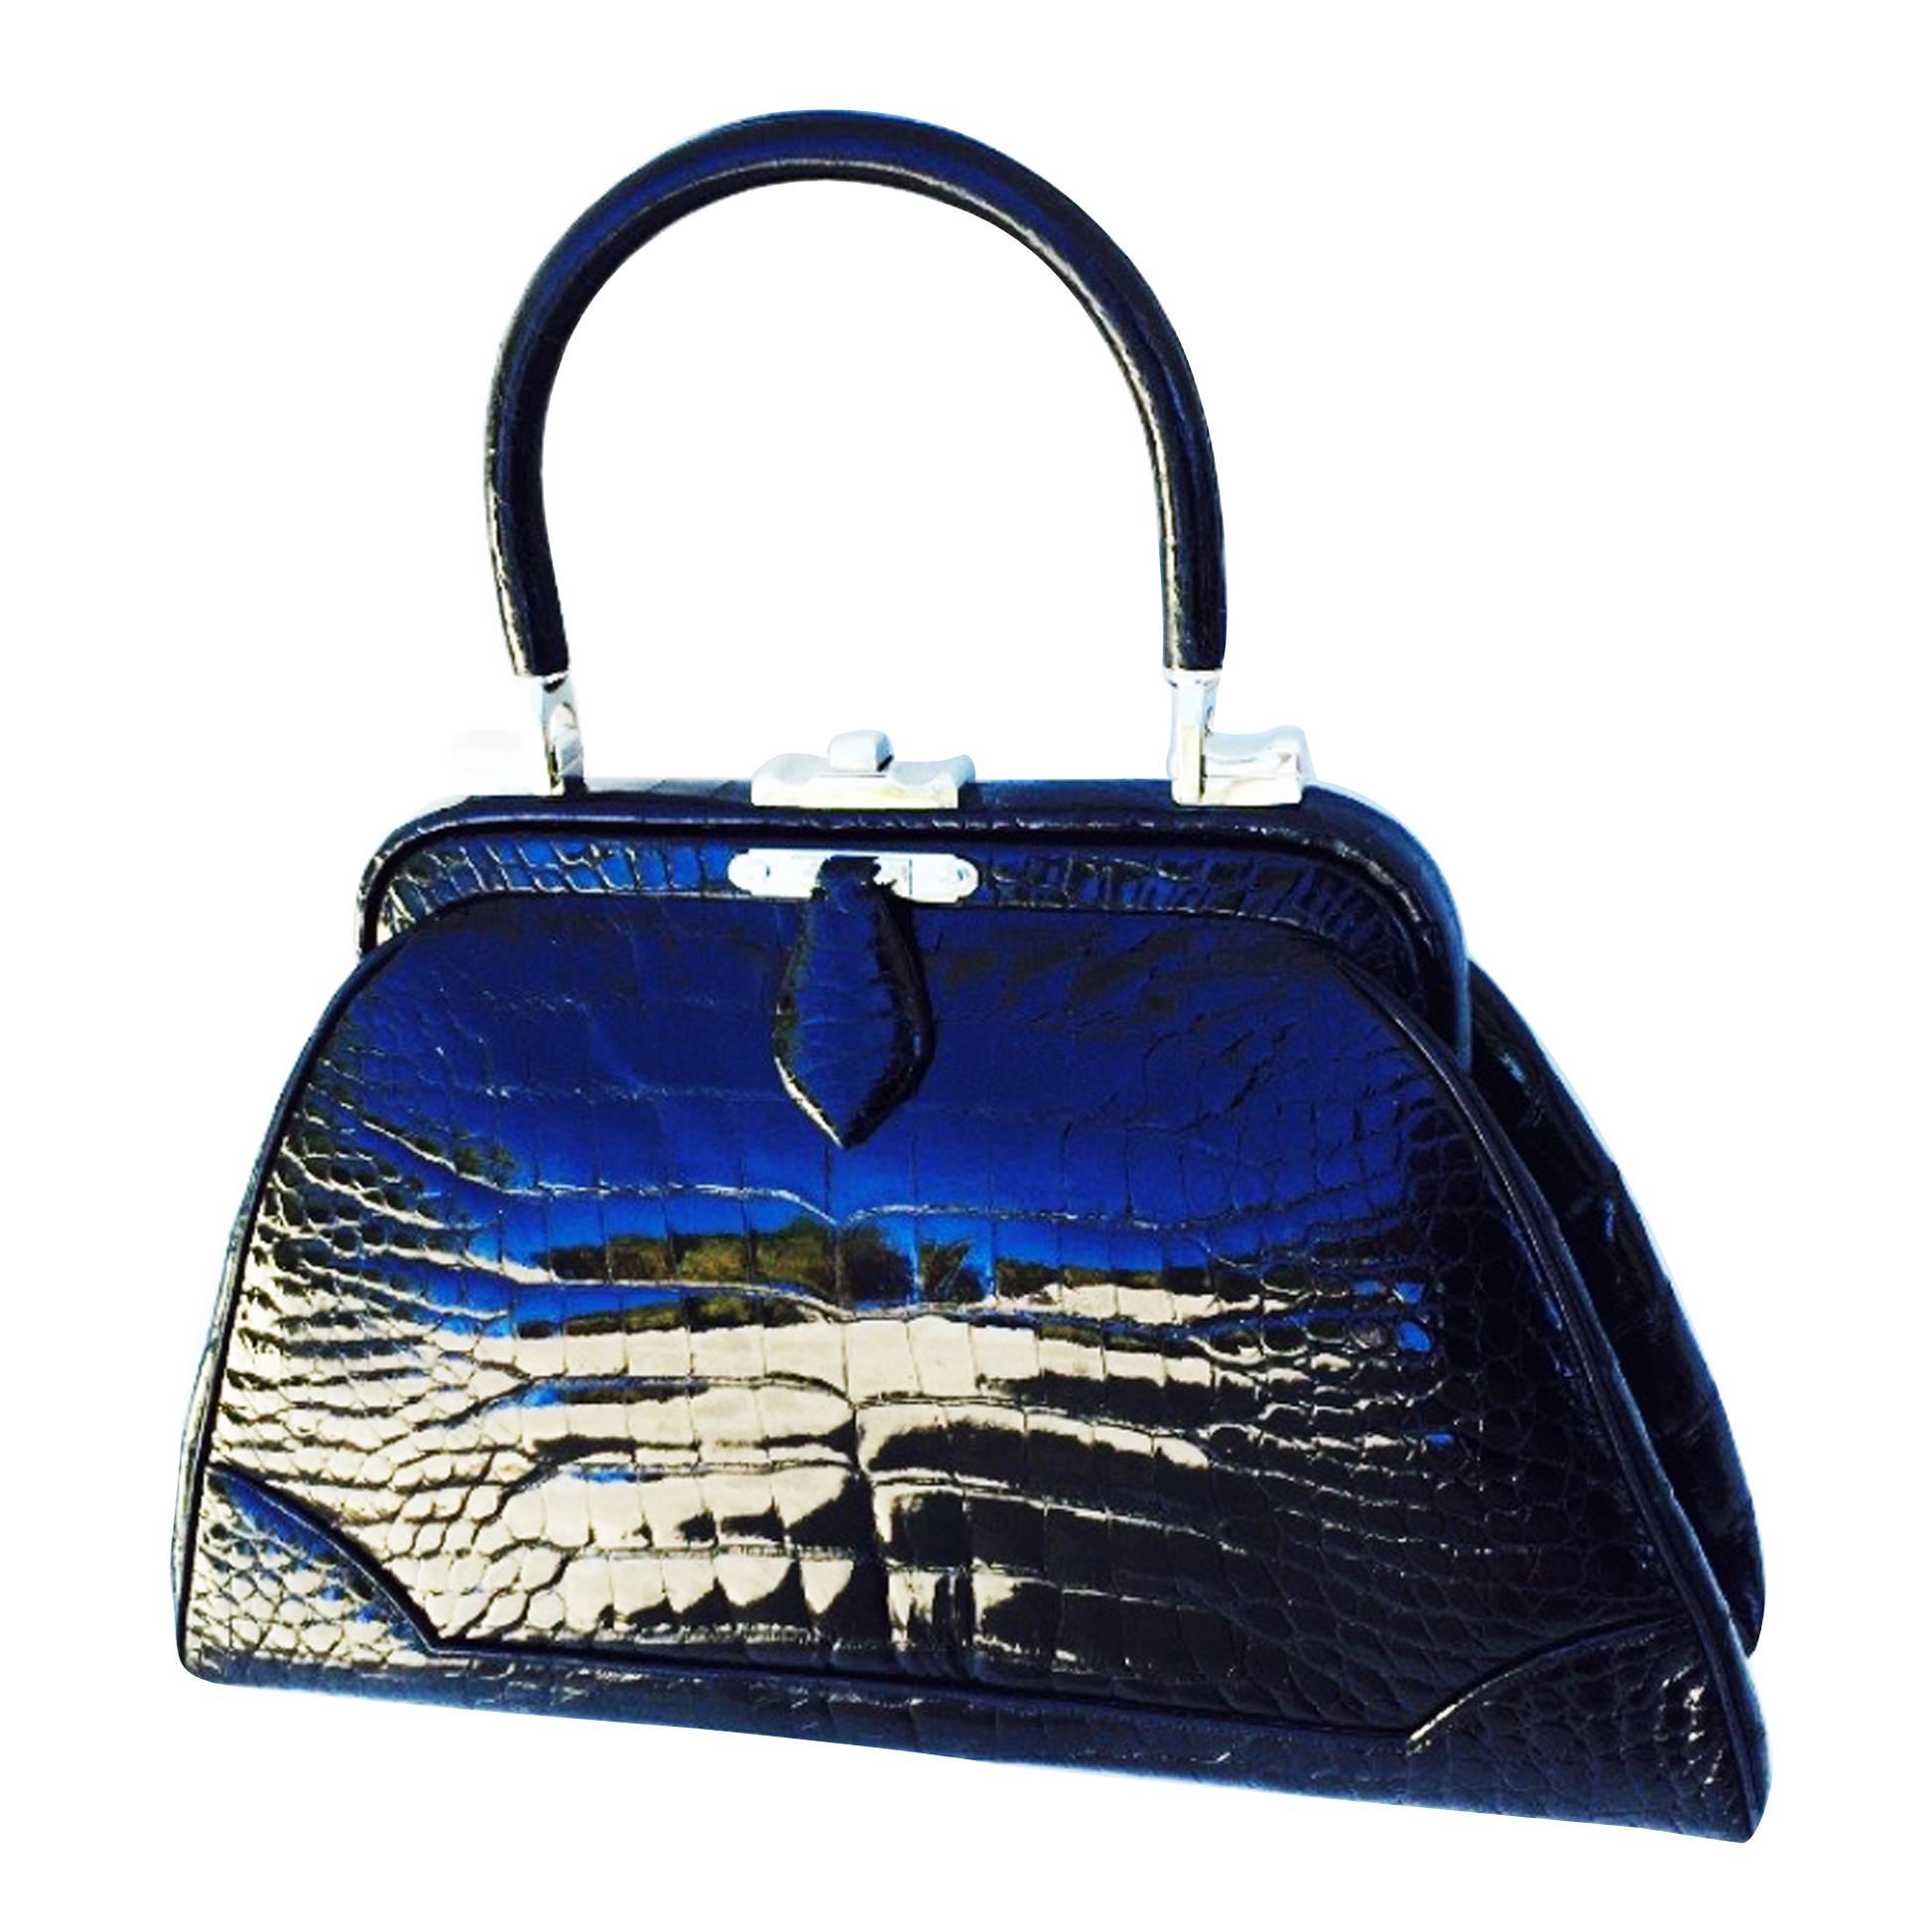 Exquisite Judith Leiber Porosus Crocodile Handbag 1960s For Sale